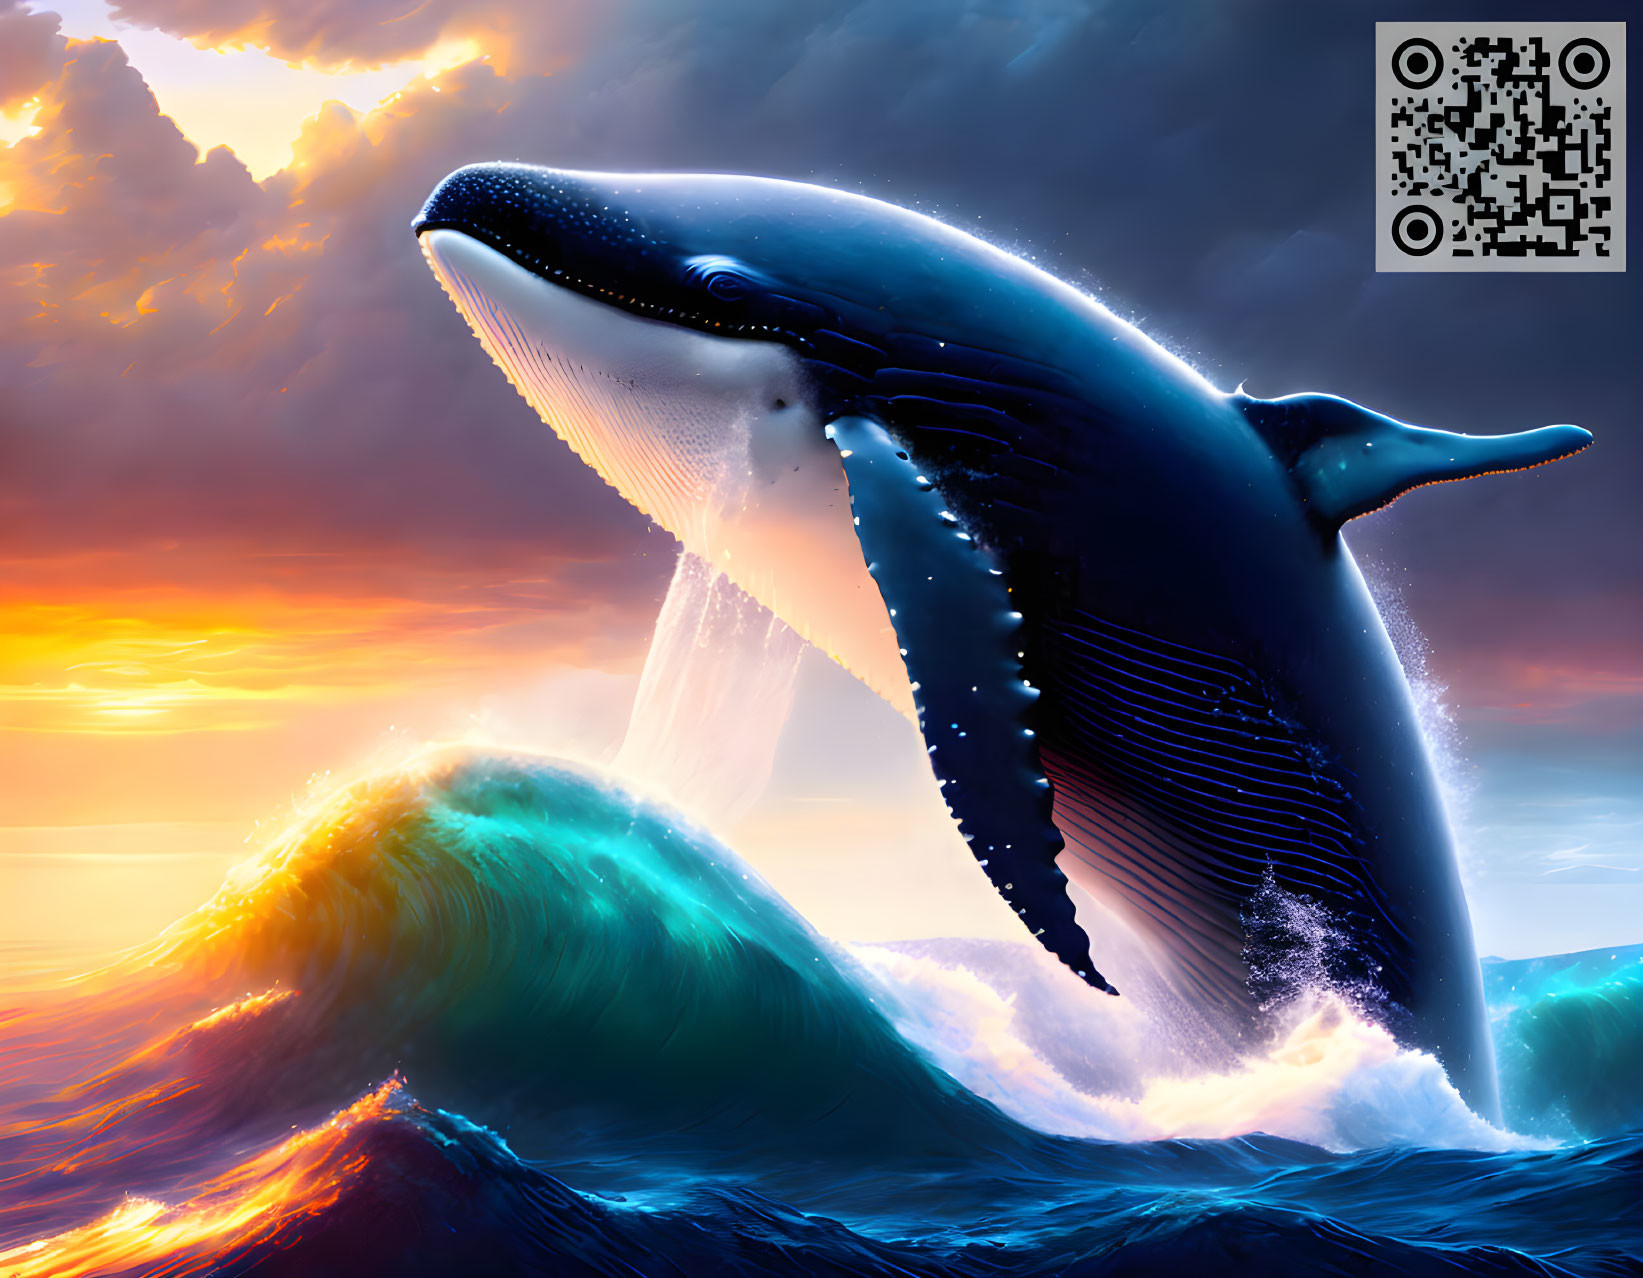 The Last Whale ©Lise_W